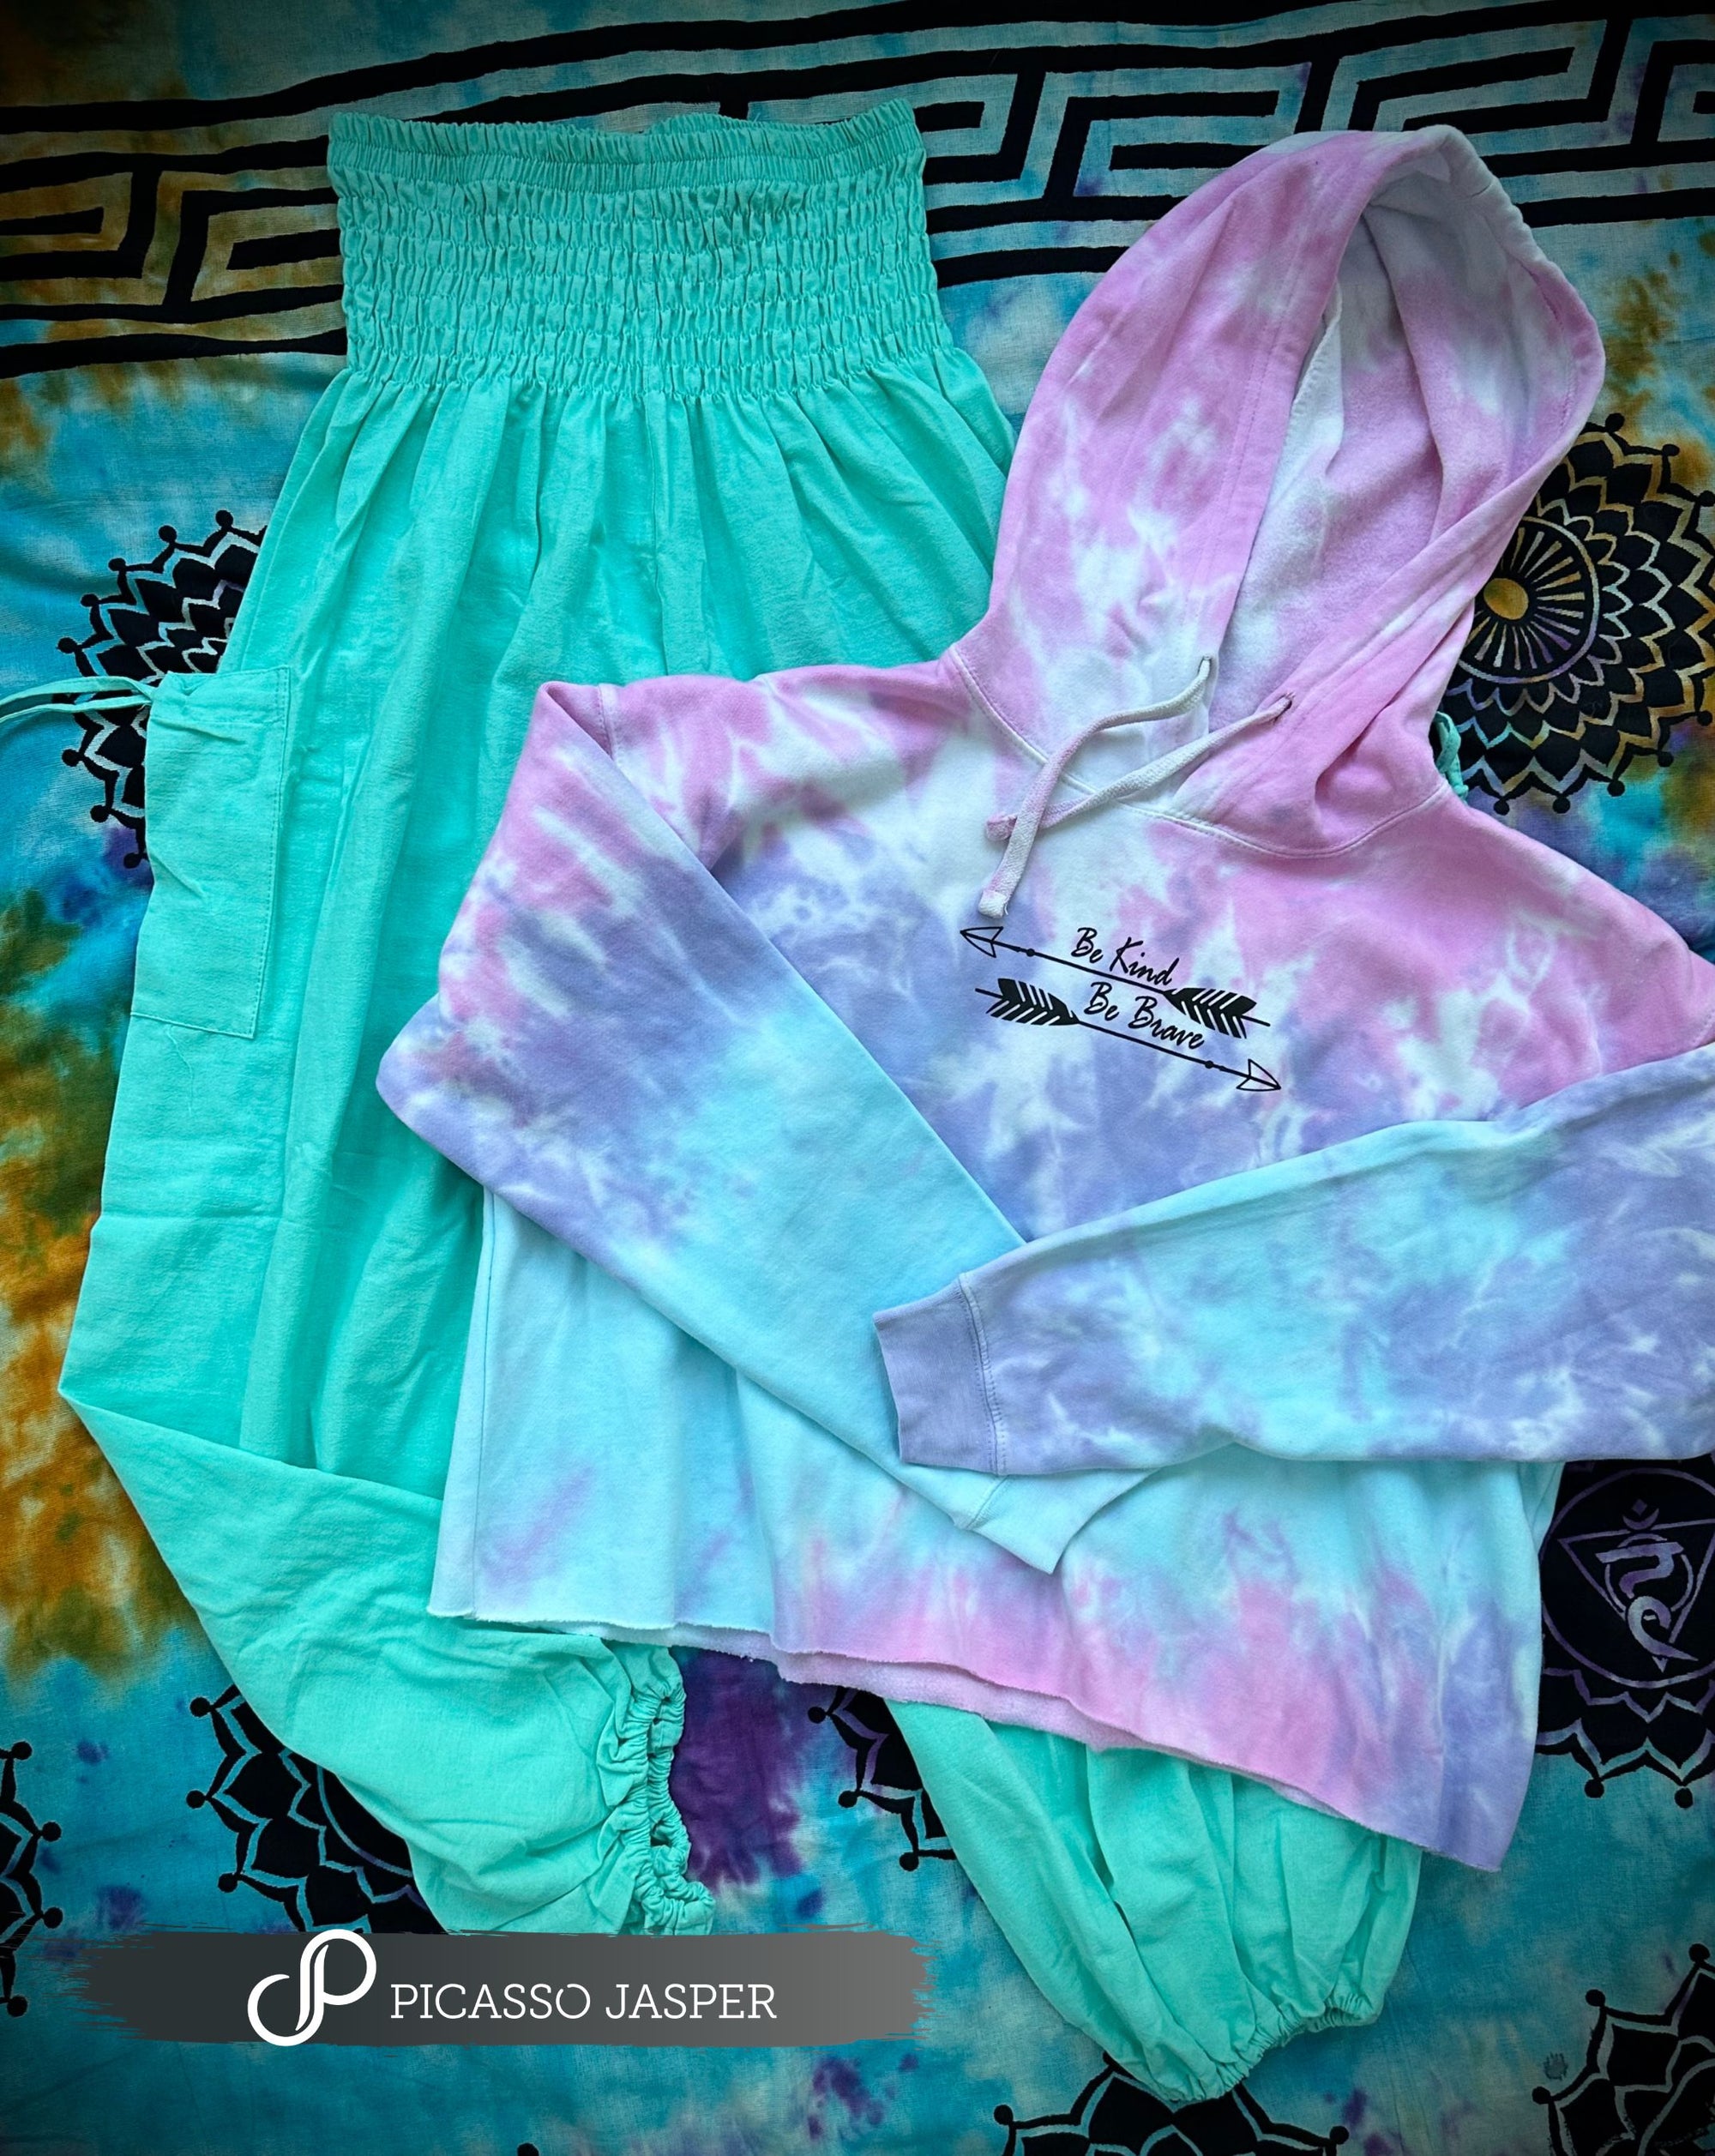 Be Kind Tie Dye Hoodie & Cotton Candy, Cotton Magic Pants + Crystal, Sweatshirt Bundle!